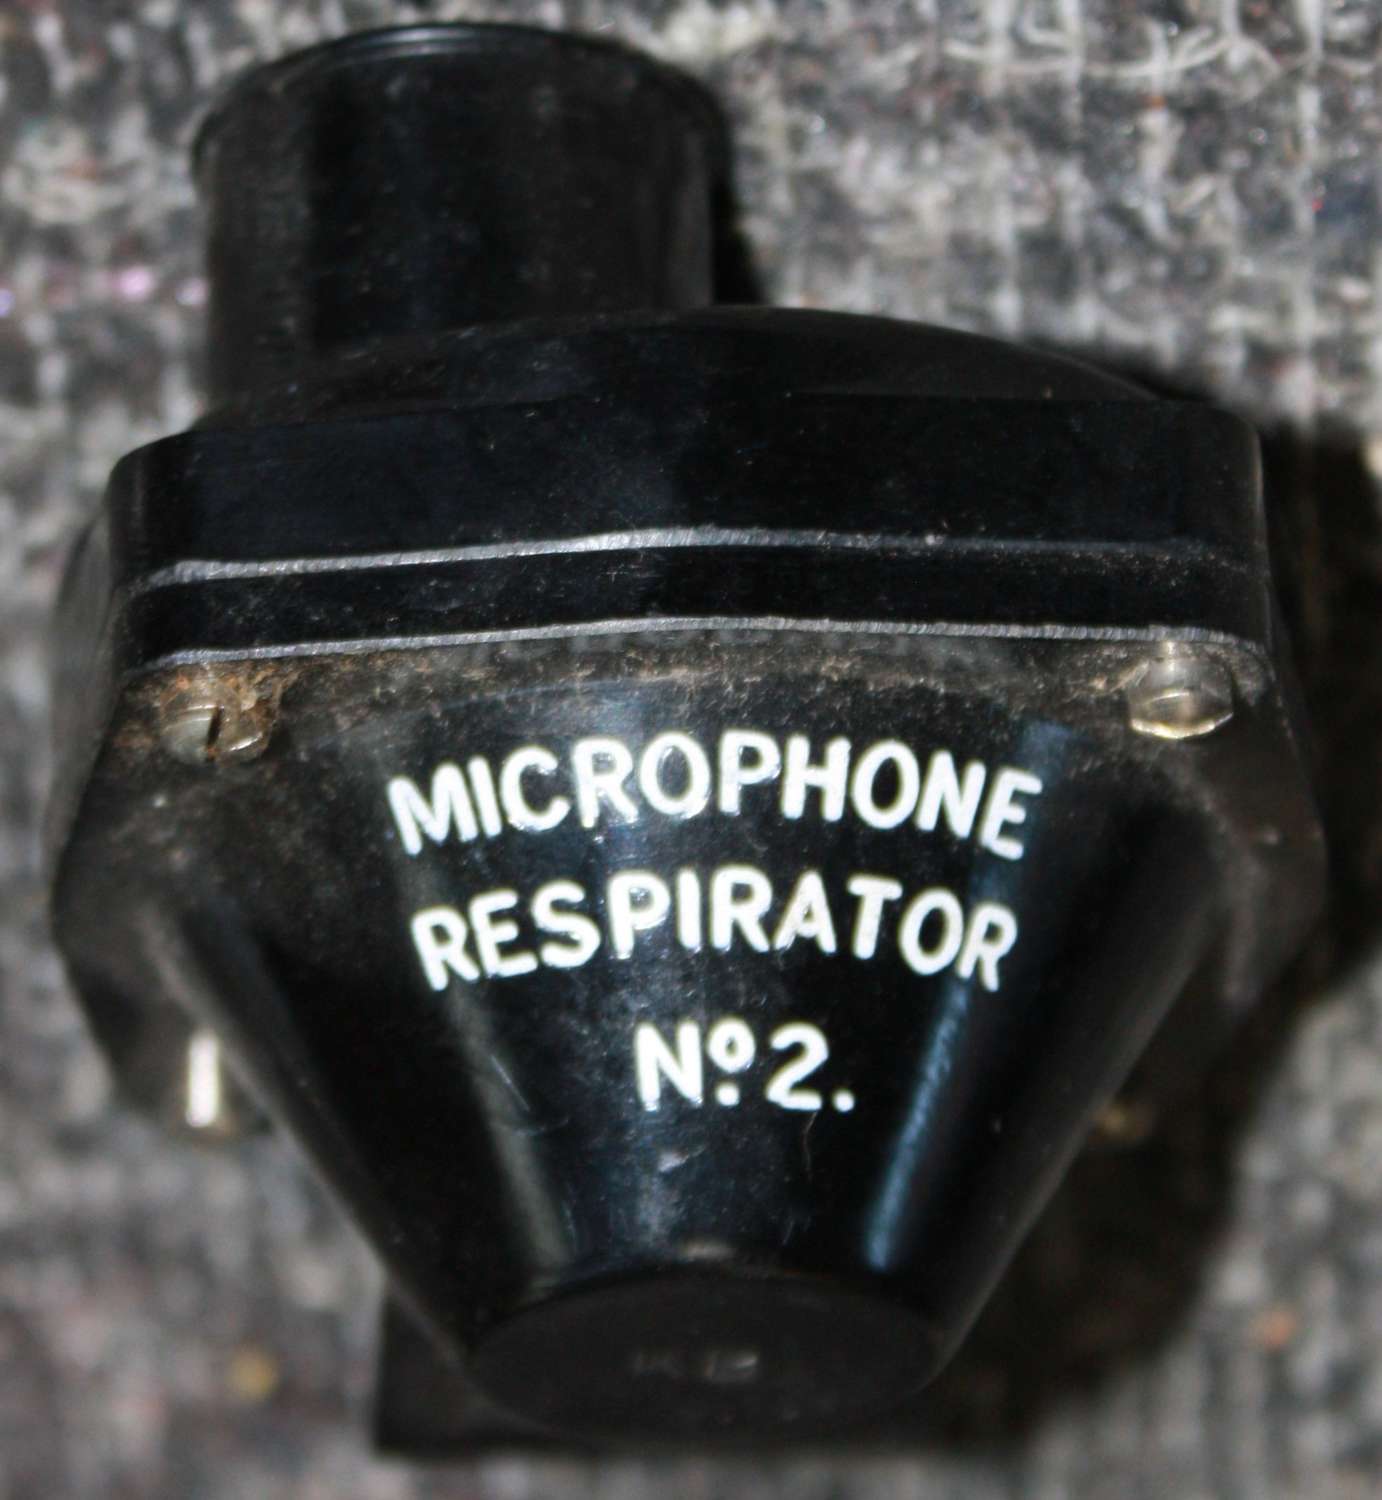 A WWII PERIOD RADIO OPERATORS GAS MASK MICROPHONE